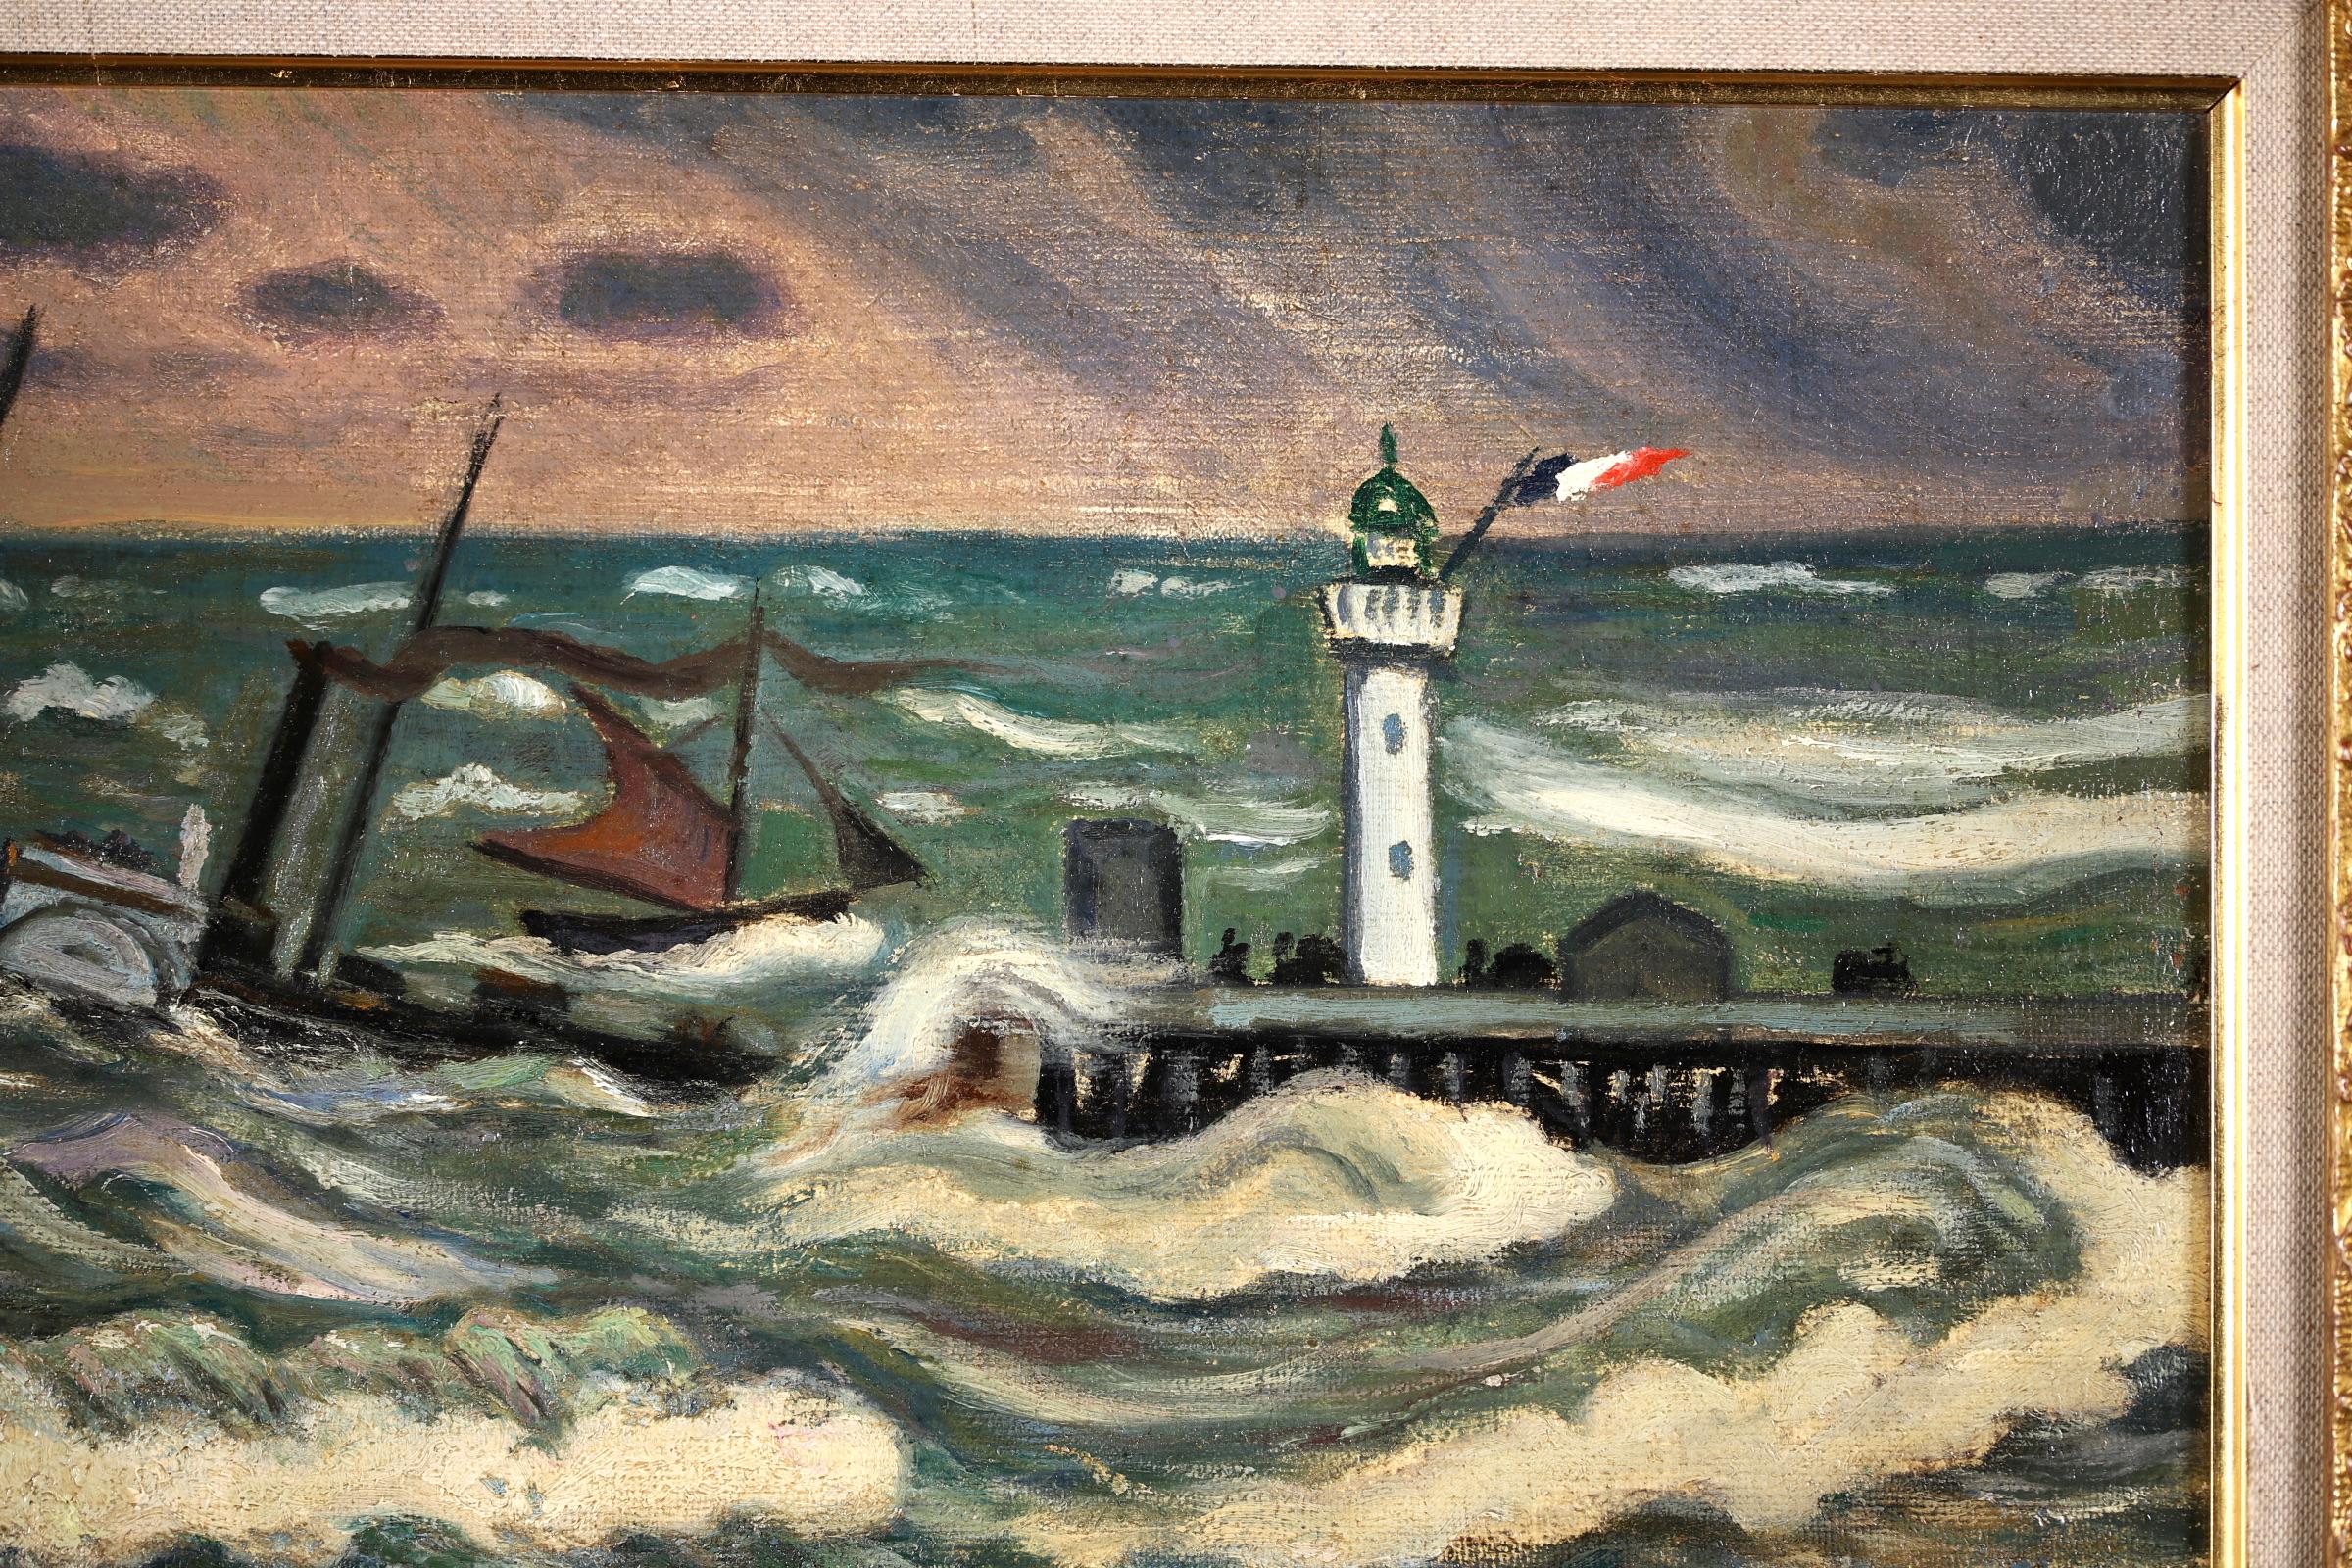 Stormy Weather - Honfleur - Postimpressionistisches Ölgemälde, Meereslandschaft von H de Saint-Delis (Post-Impressionismus), Painting, von Henri Liénard de Saint-Délis